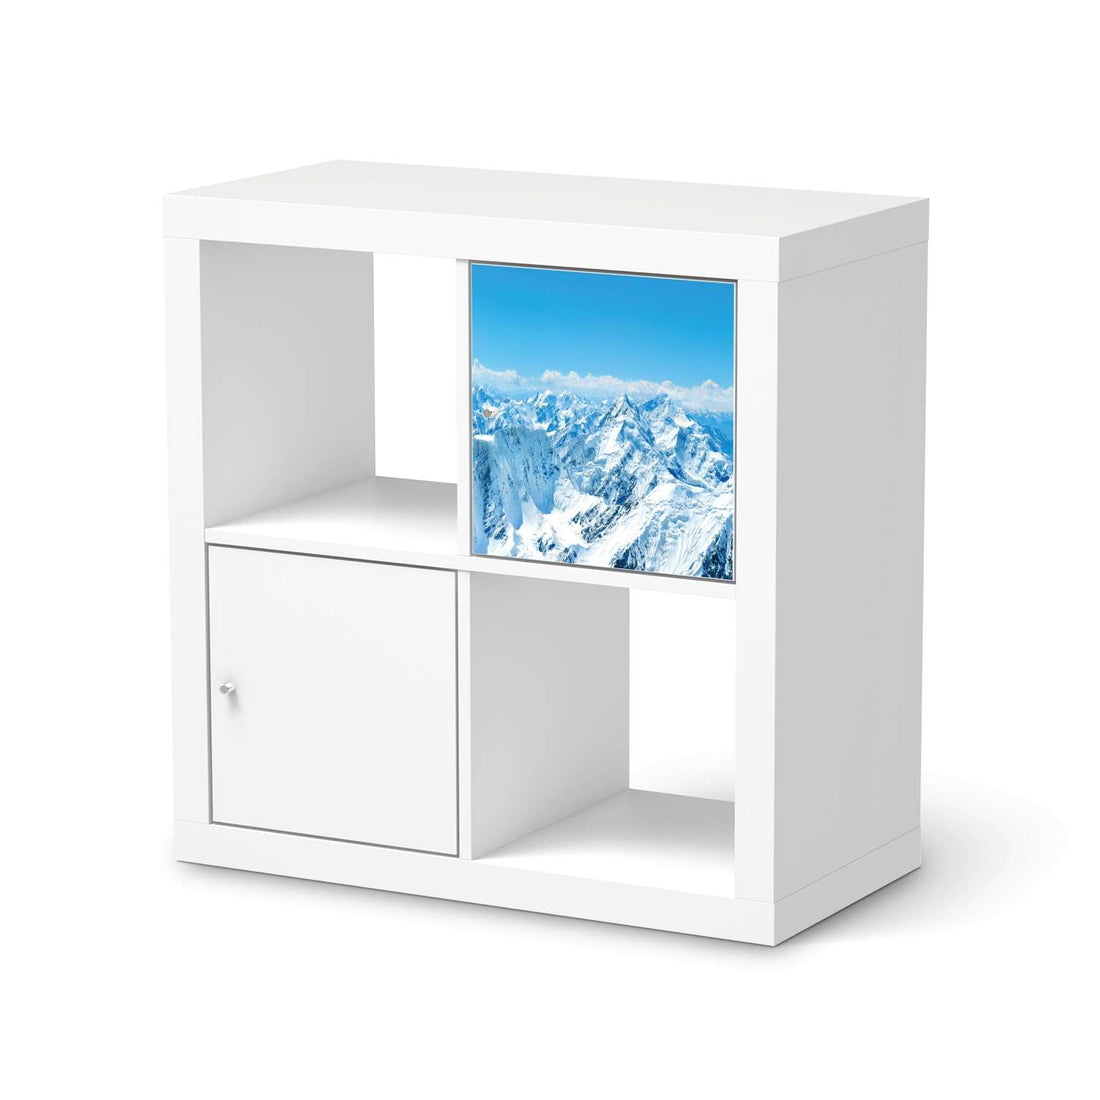 Selbstklebende Folie Himalaya - IKEA Kallax Regal 1 Türe  - weiss